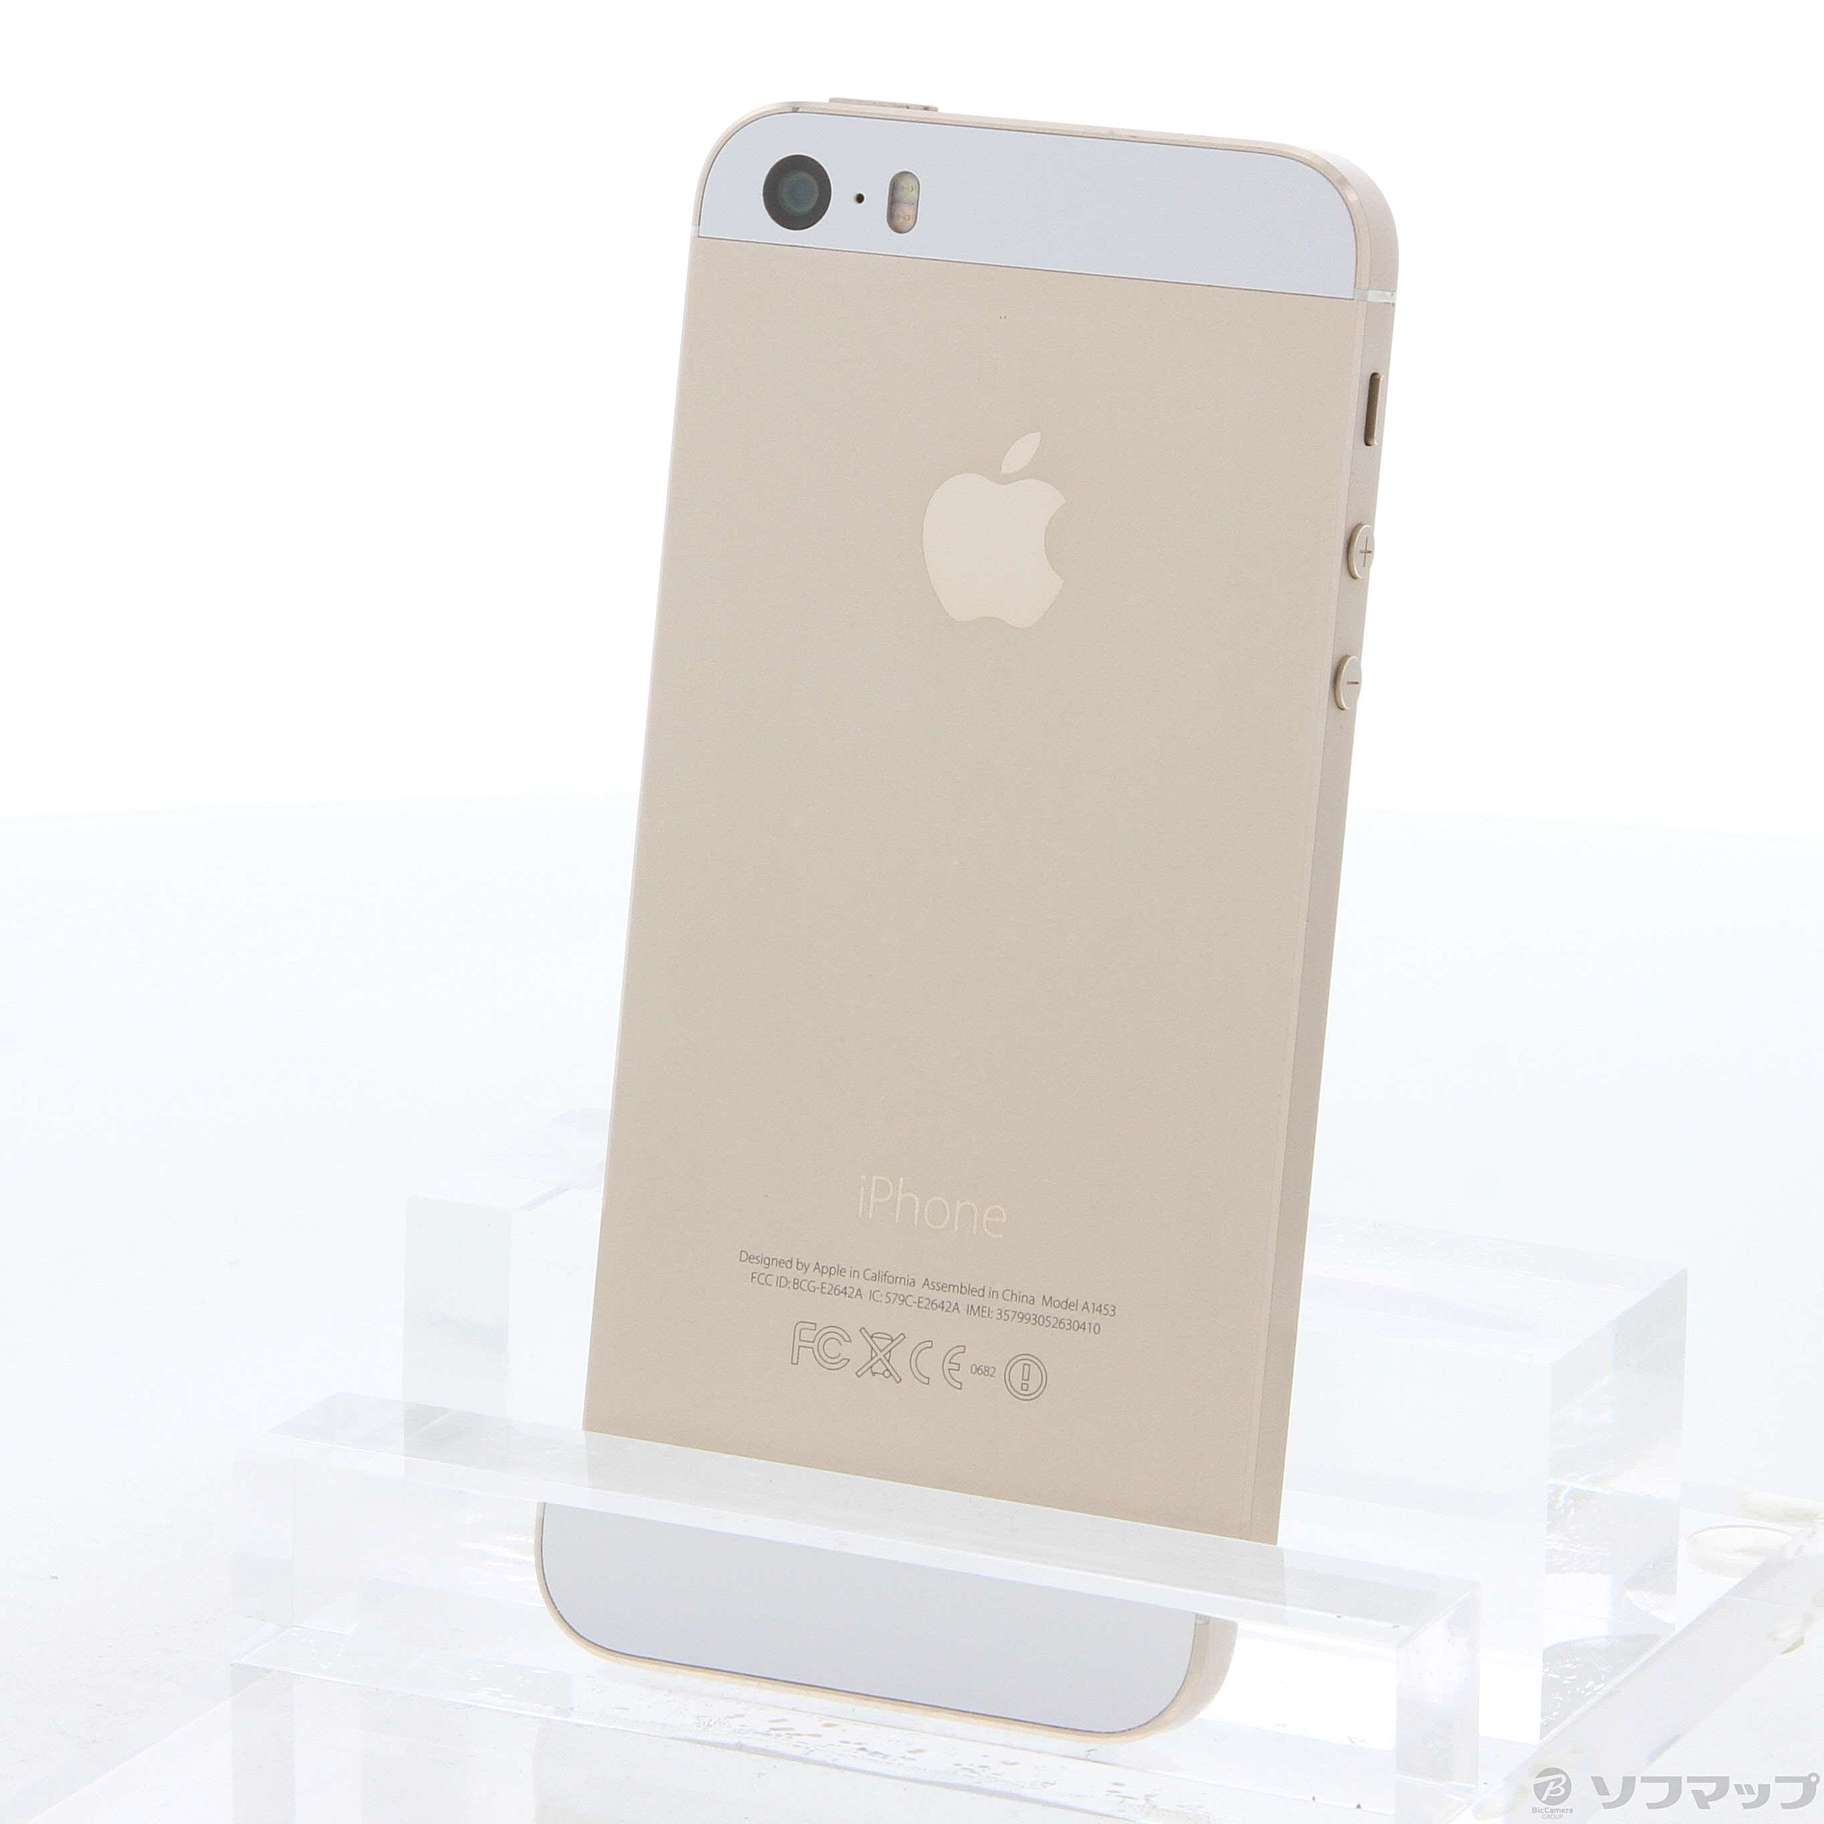 iPhone 5s Gold 64 GB docomo - スマートフォン本体